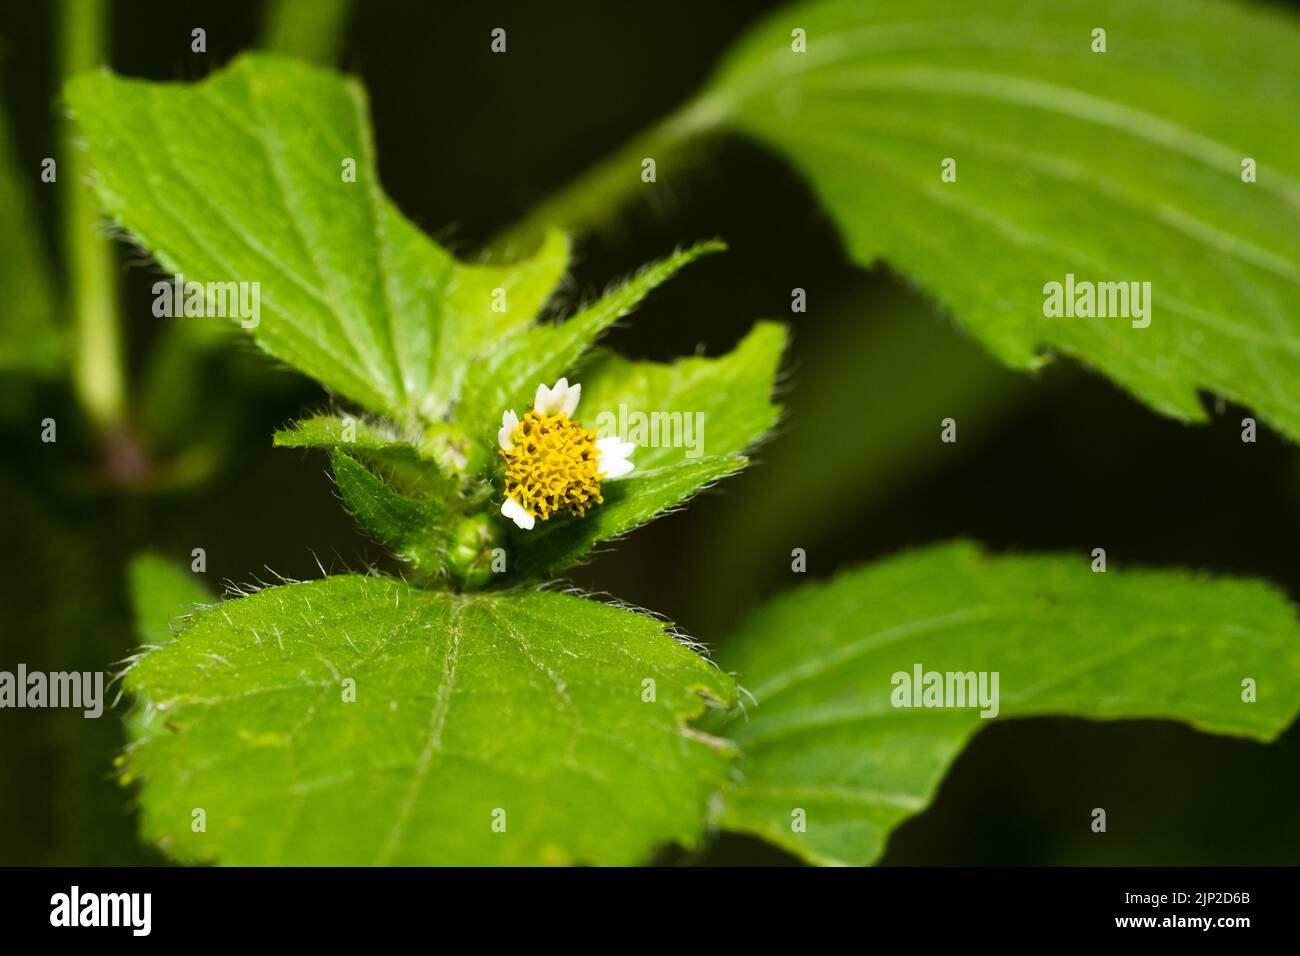 little flower (Galinsoga ciliata) on blurred background Stock Photo